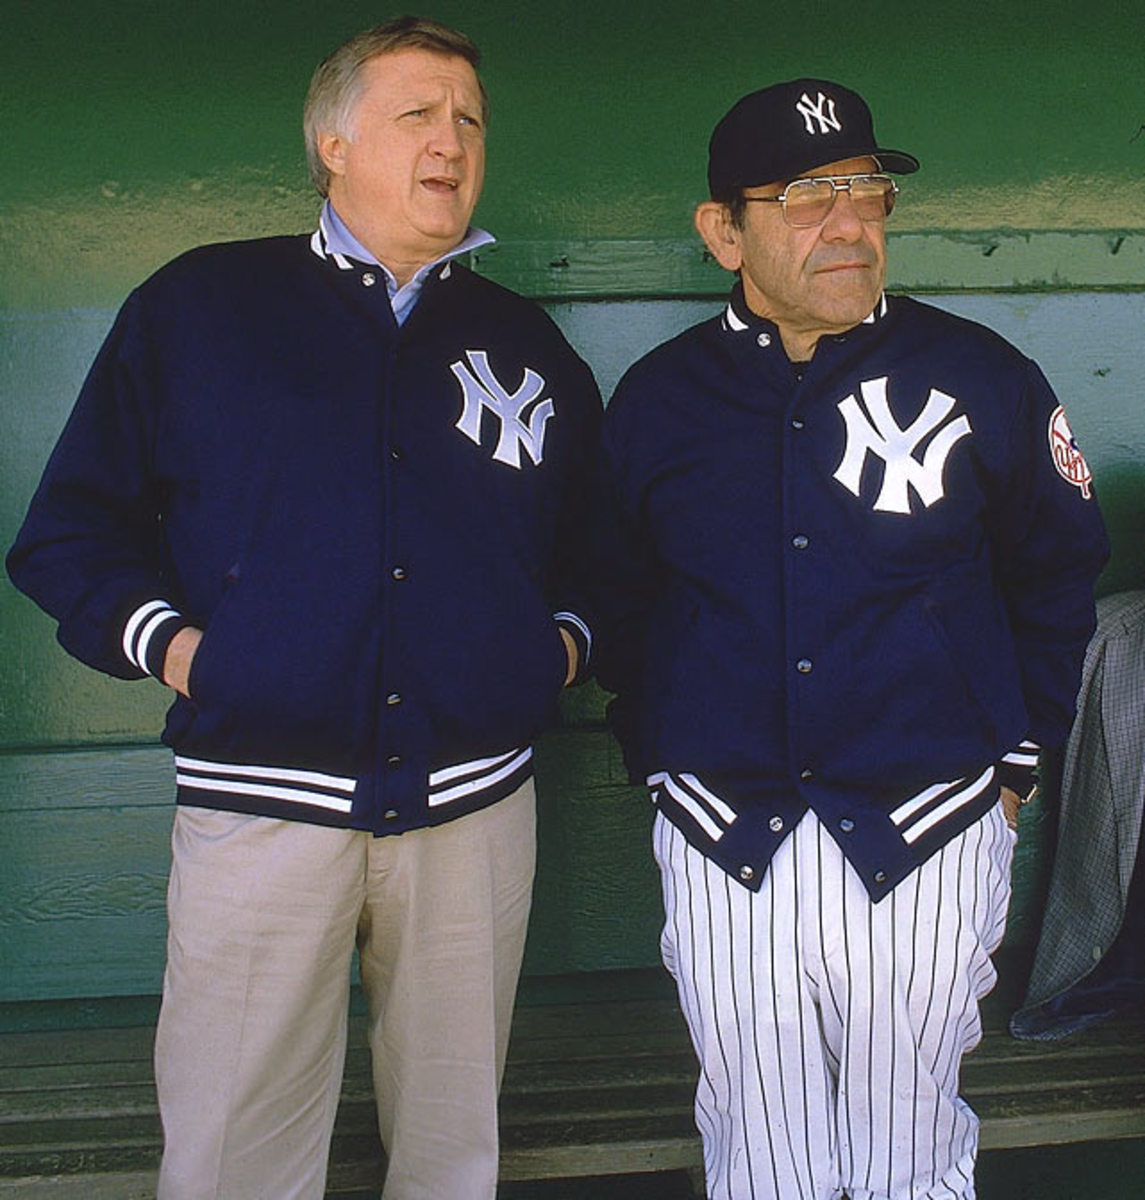 Yogi Berra, Dead at 90: Remembering the Yankees Hero, Icon, and Wordsm